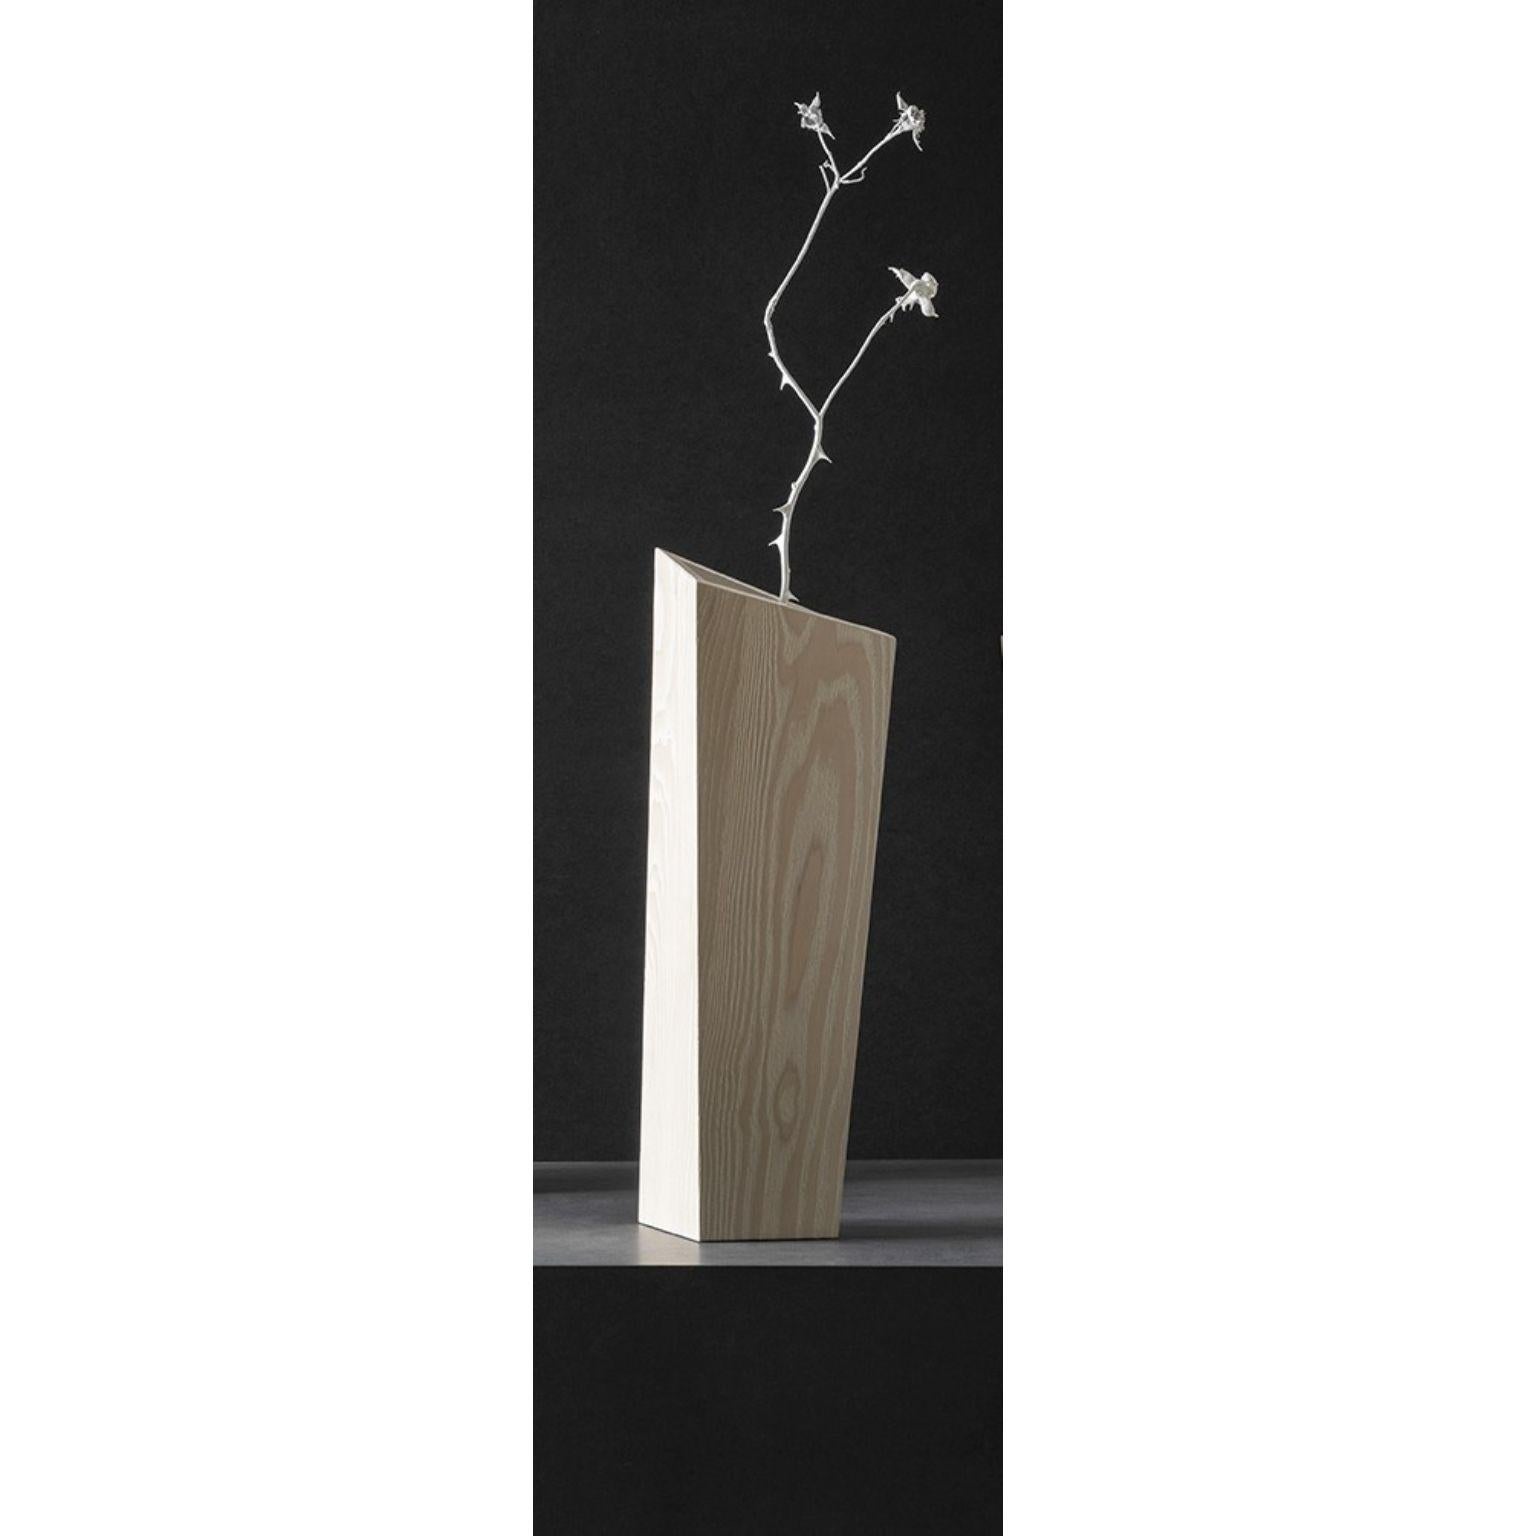 Large white ash nun vase by Matthias Scherzinger
Limited Edition of 30 pieces, each colour each size
Engraved brass-label with number
Dimensions: L 14.5 x W 14.5 x 46 cm
Materials: ash: lyed - white

Large size available:
L 19 x W 19 x H 73